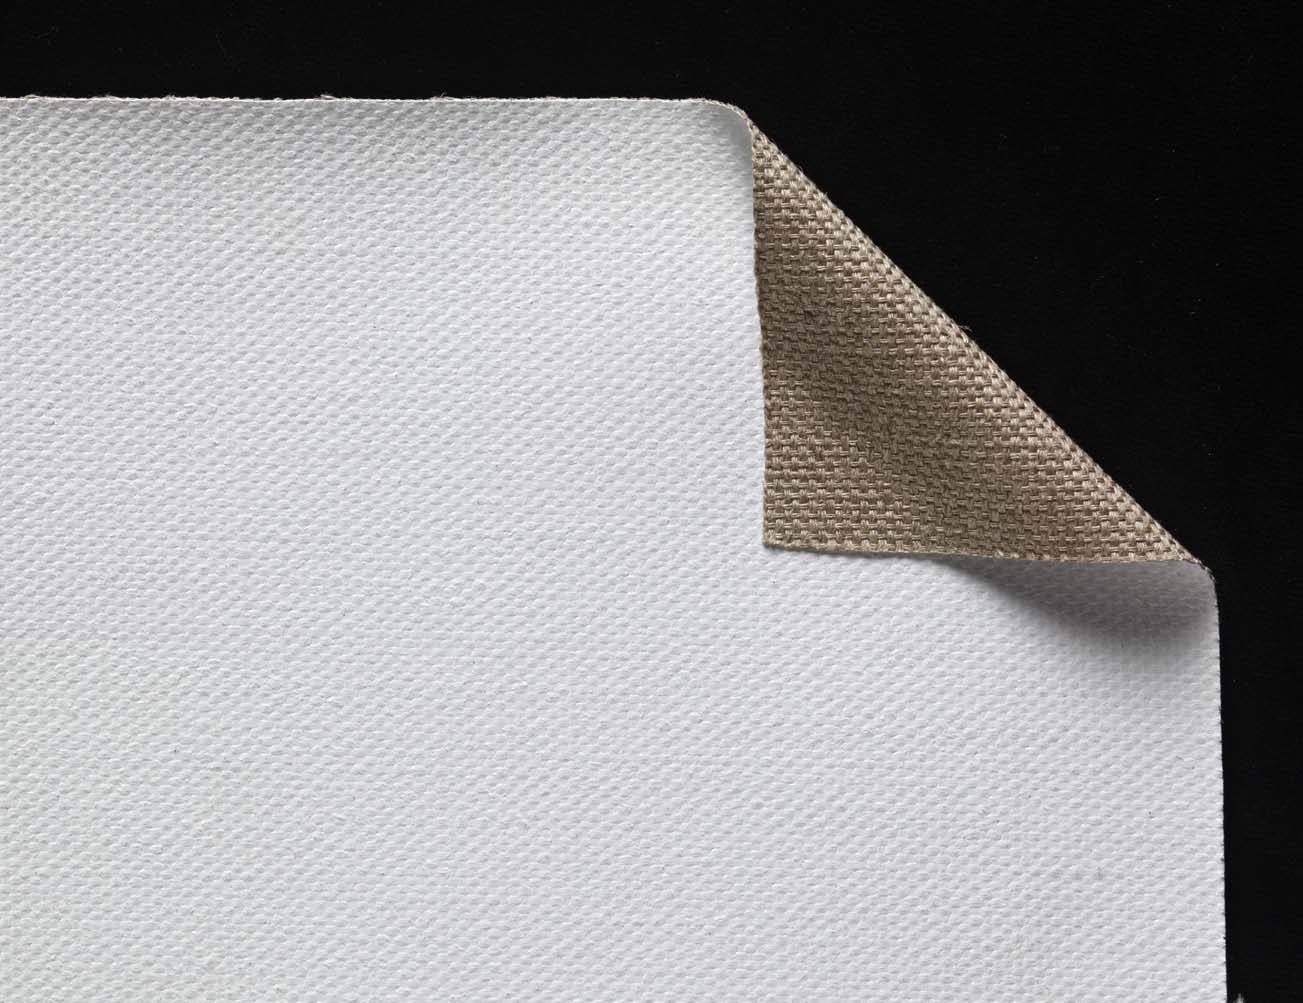 CLAESSENS 129 primed linen 522 g/m² white, 2.10 m width, coarse